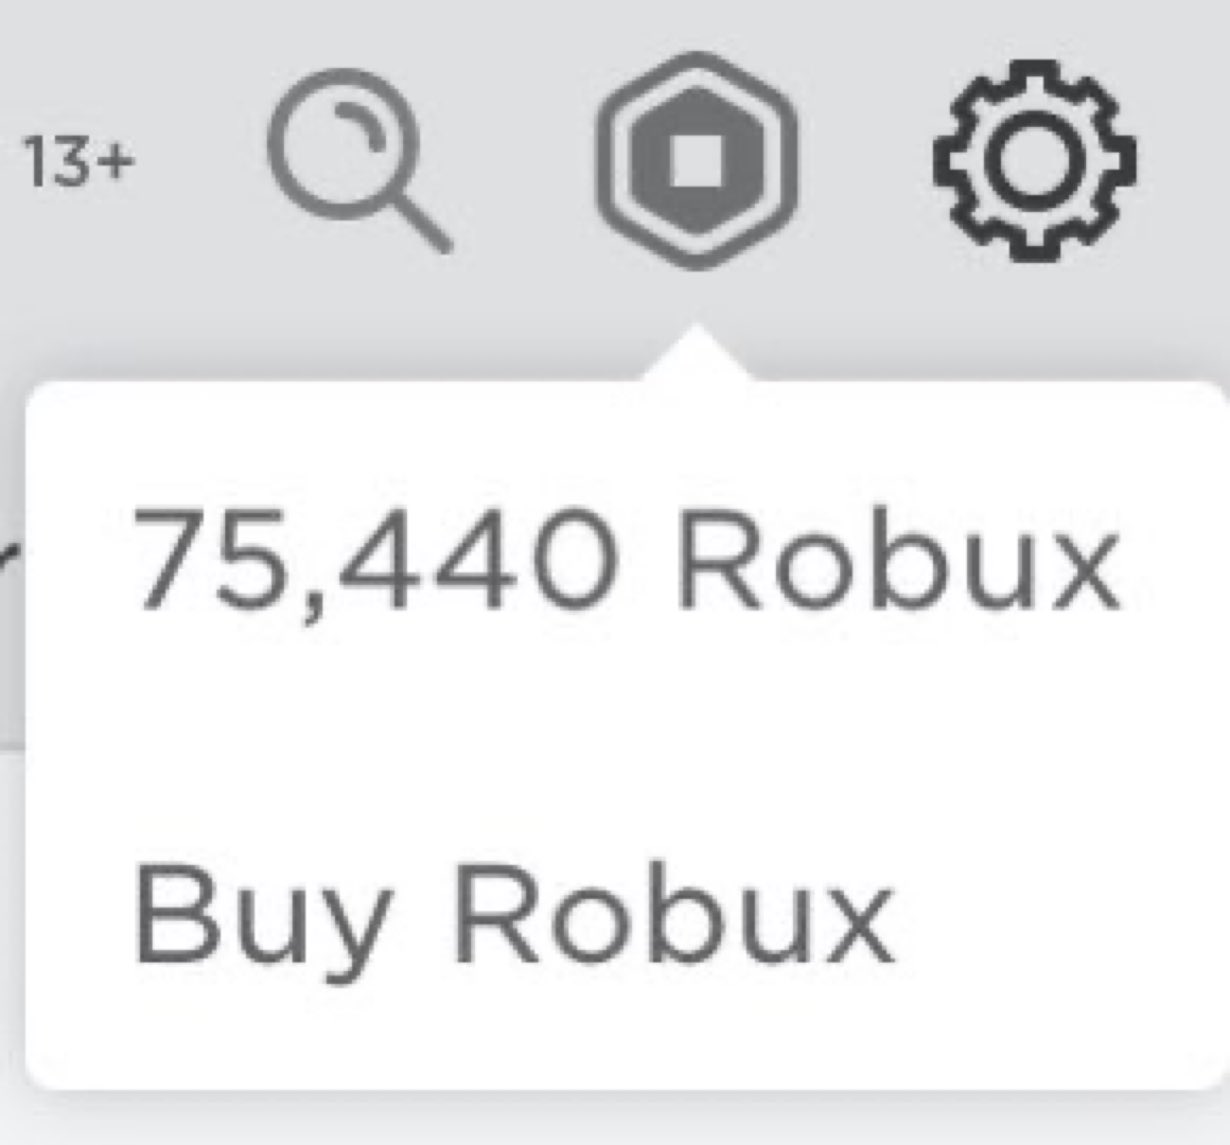 roblox account (worth 500!)